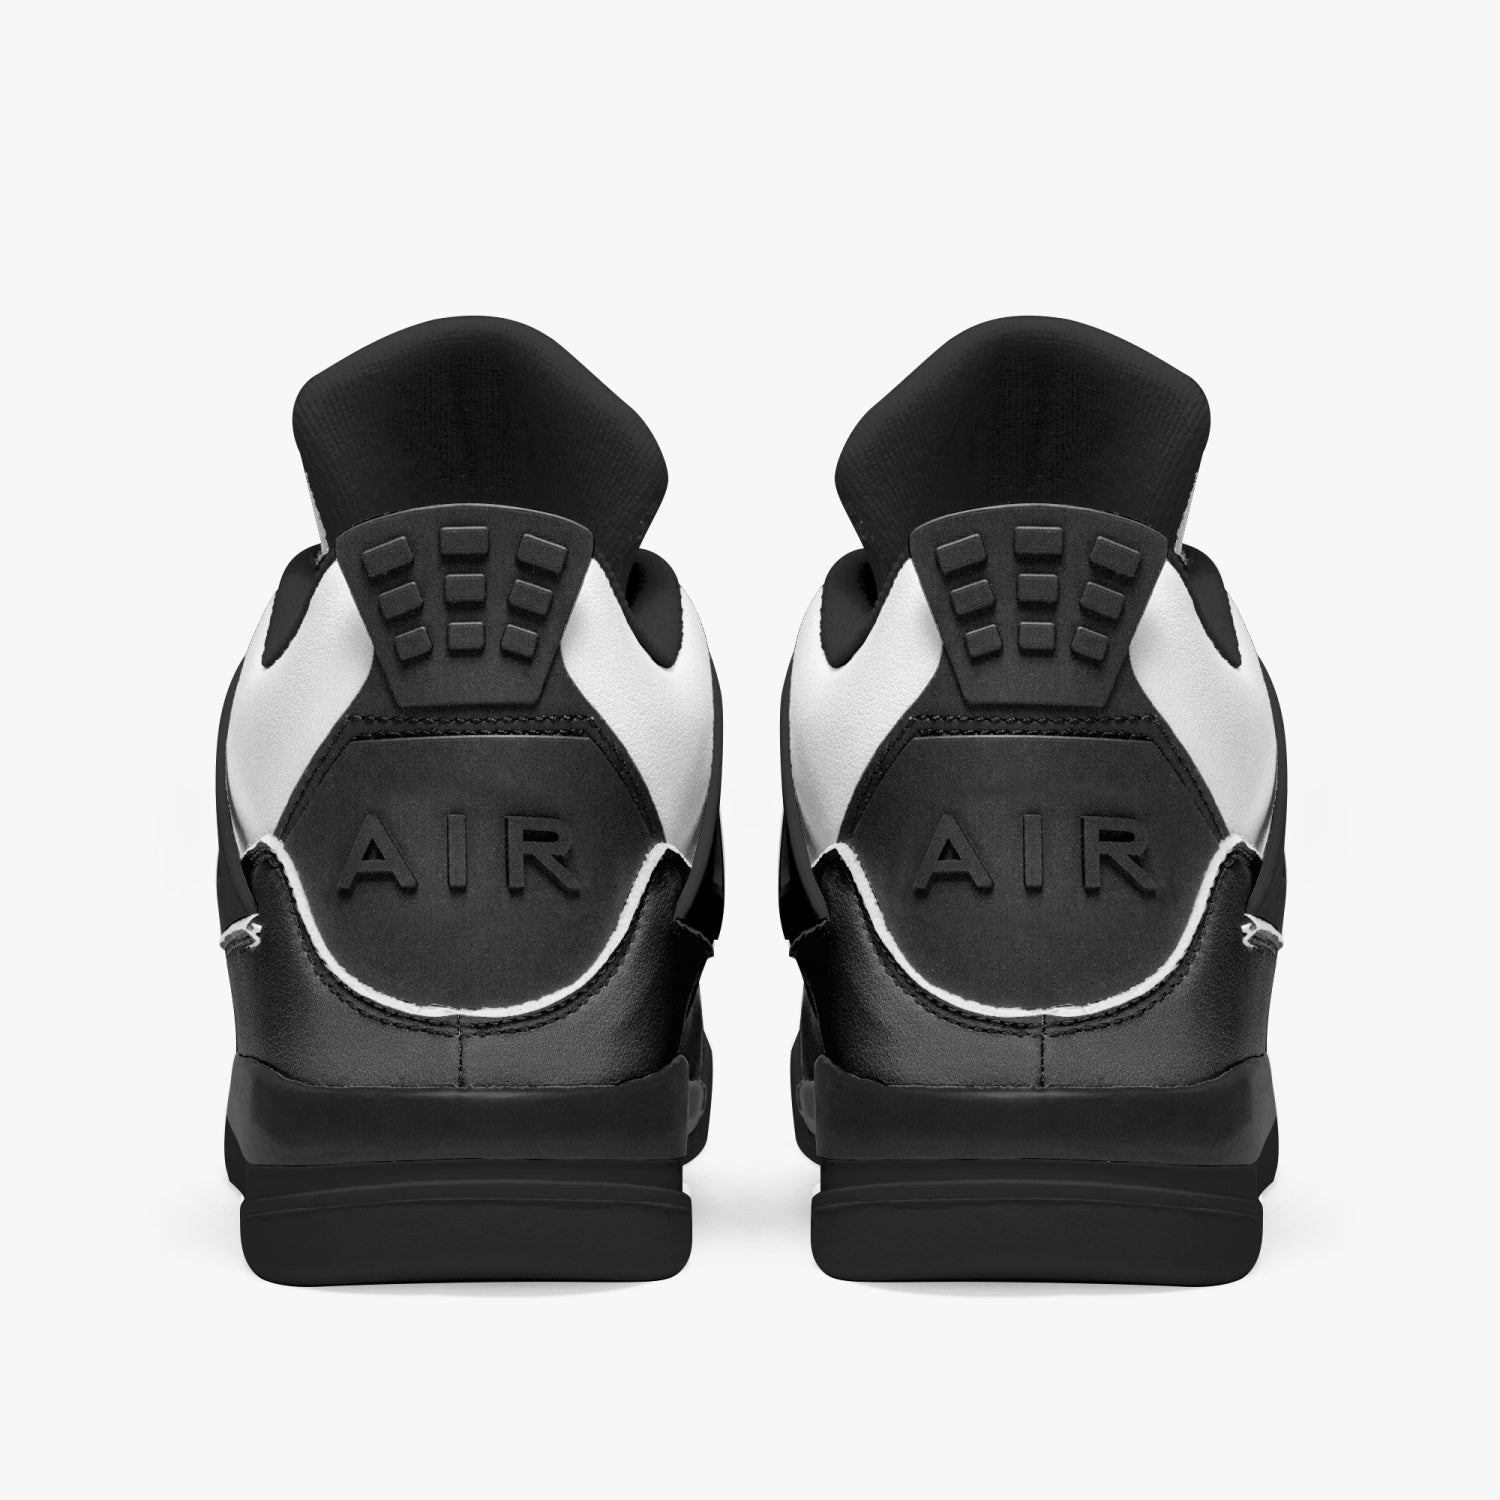 698. AJ4 Basketball Sneakers -Black Sole